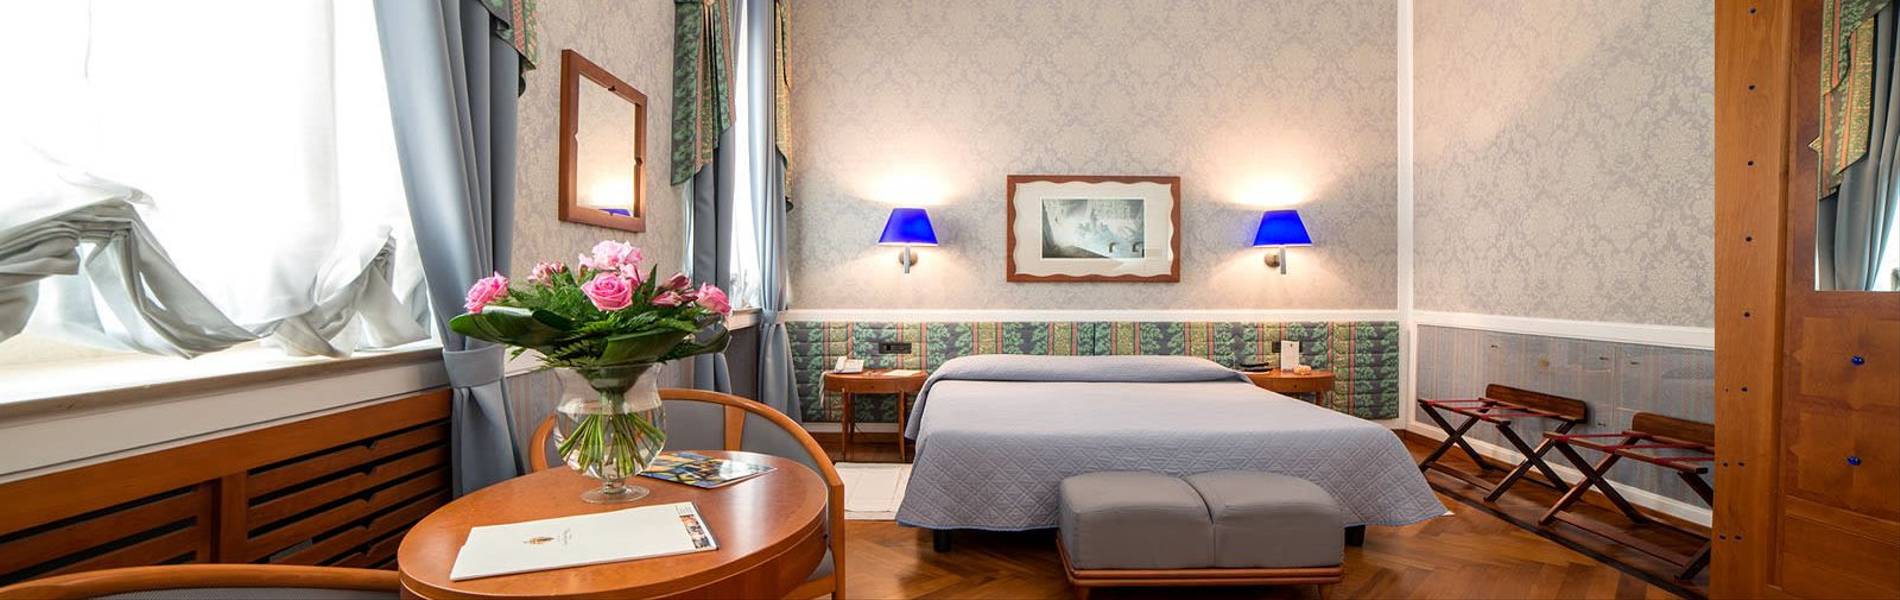 Grand Hotel Ortigia, Sicily, Italy, Double.jpg